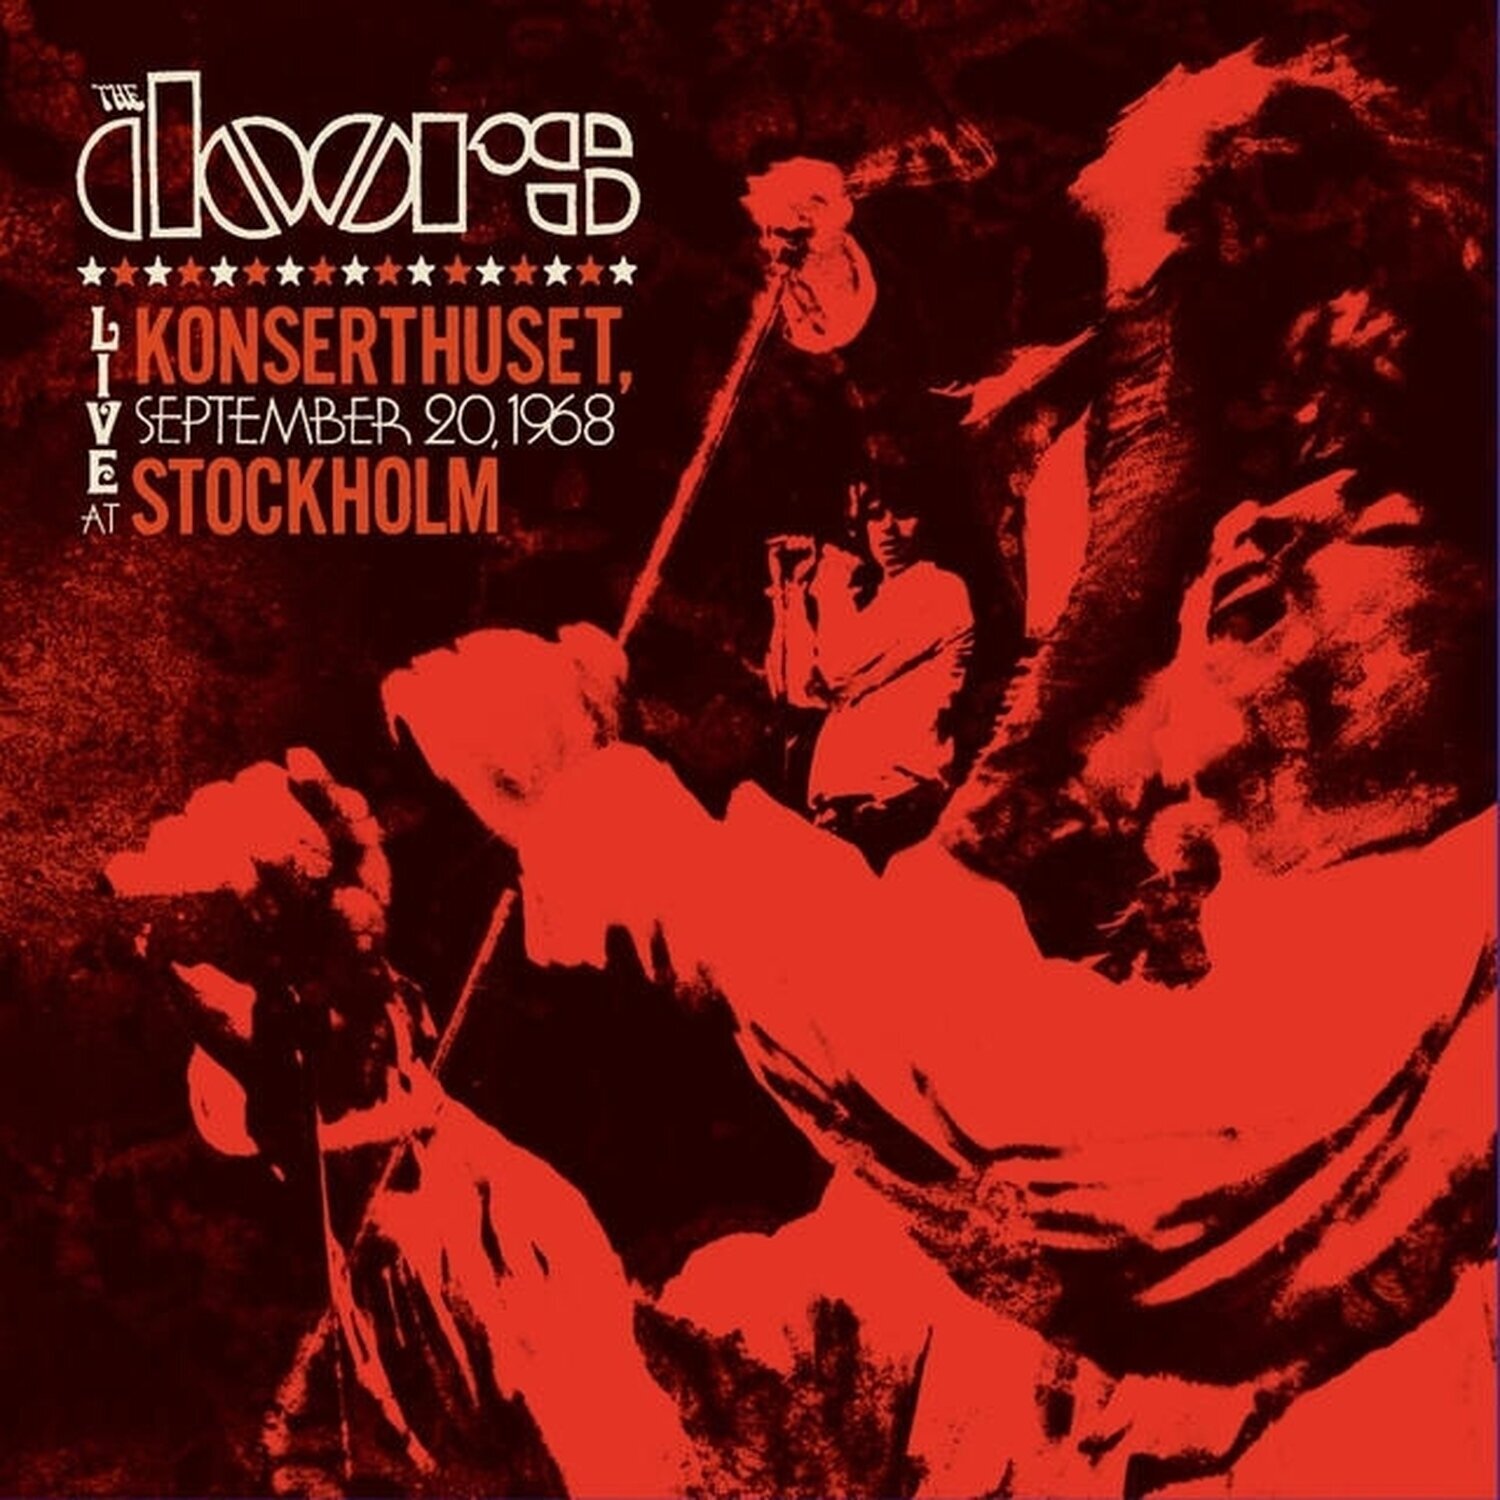 Musiikki-CD The Doors - Live At Konserthuset, Stockholm, 1968 (Rsd 2024) (2 CD)